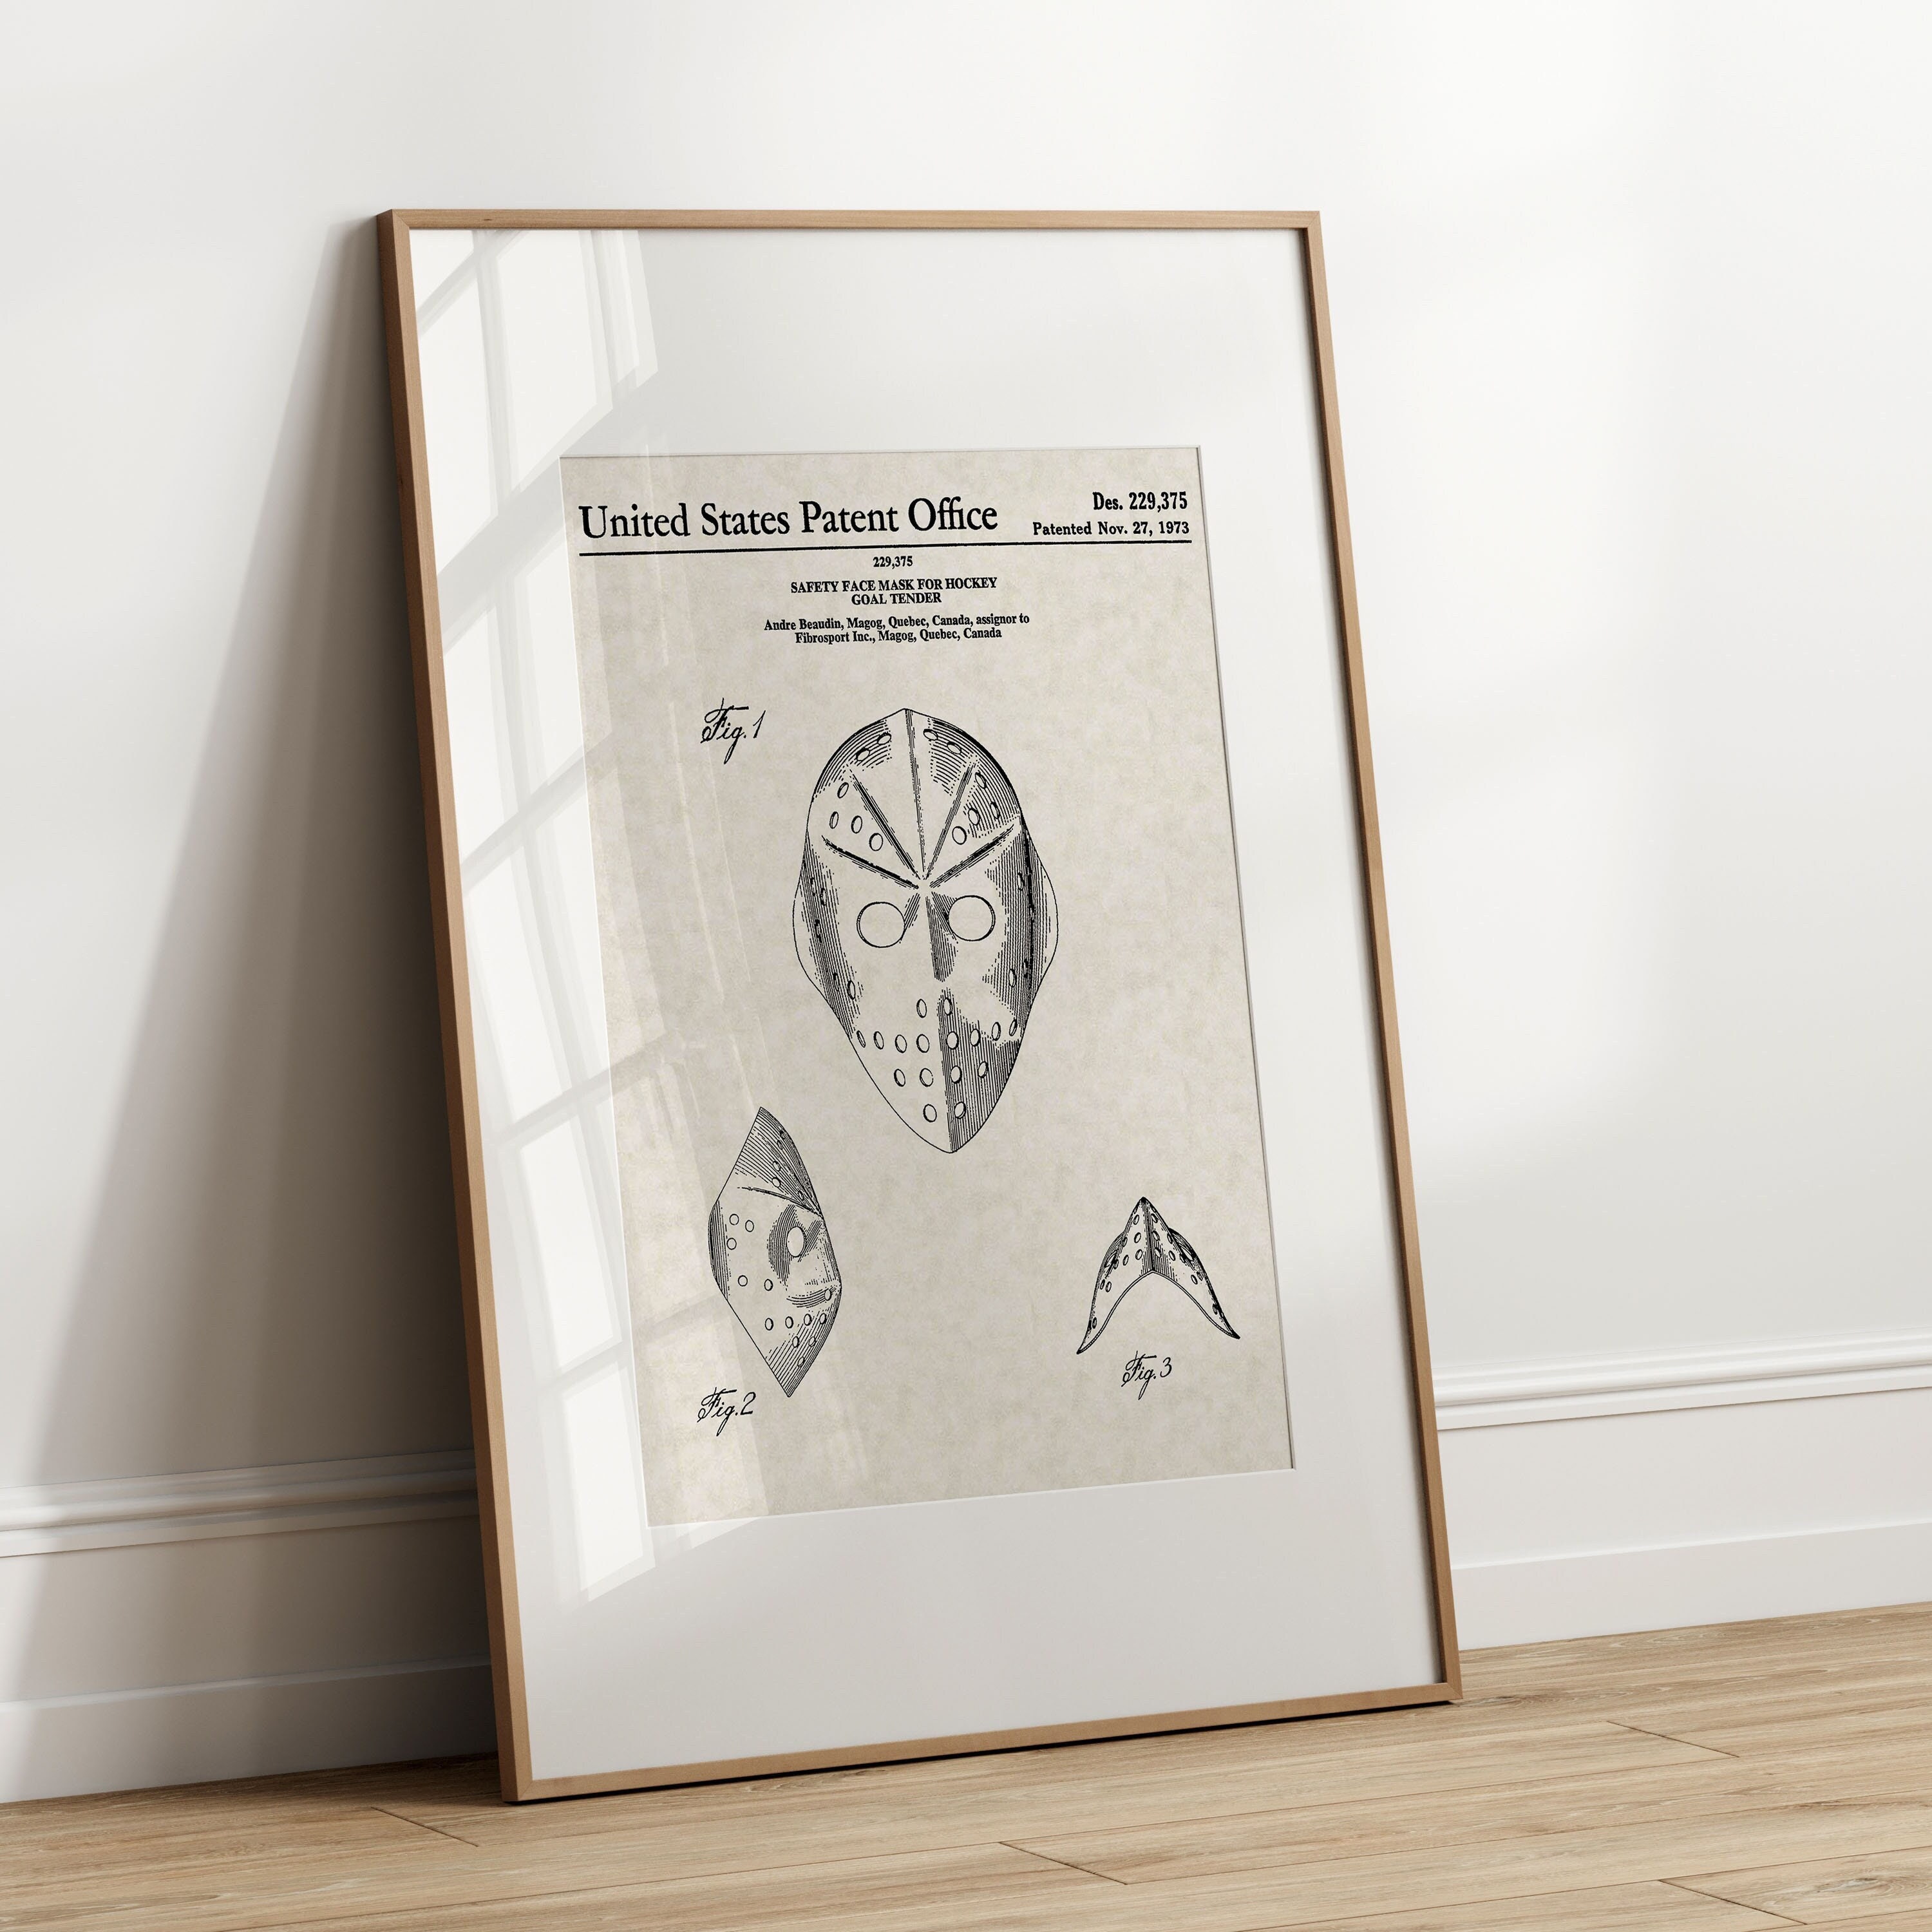  Goalie Mask Canvas Print - Fibrosport Mask Hockey Wall Art  Decor, Hockey Gift : Handmade Products